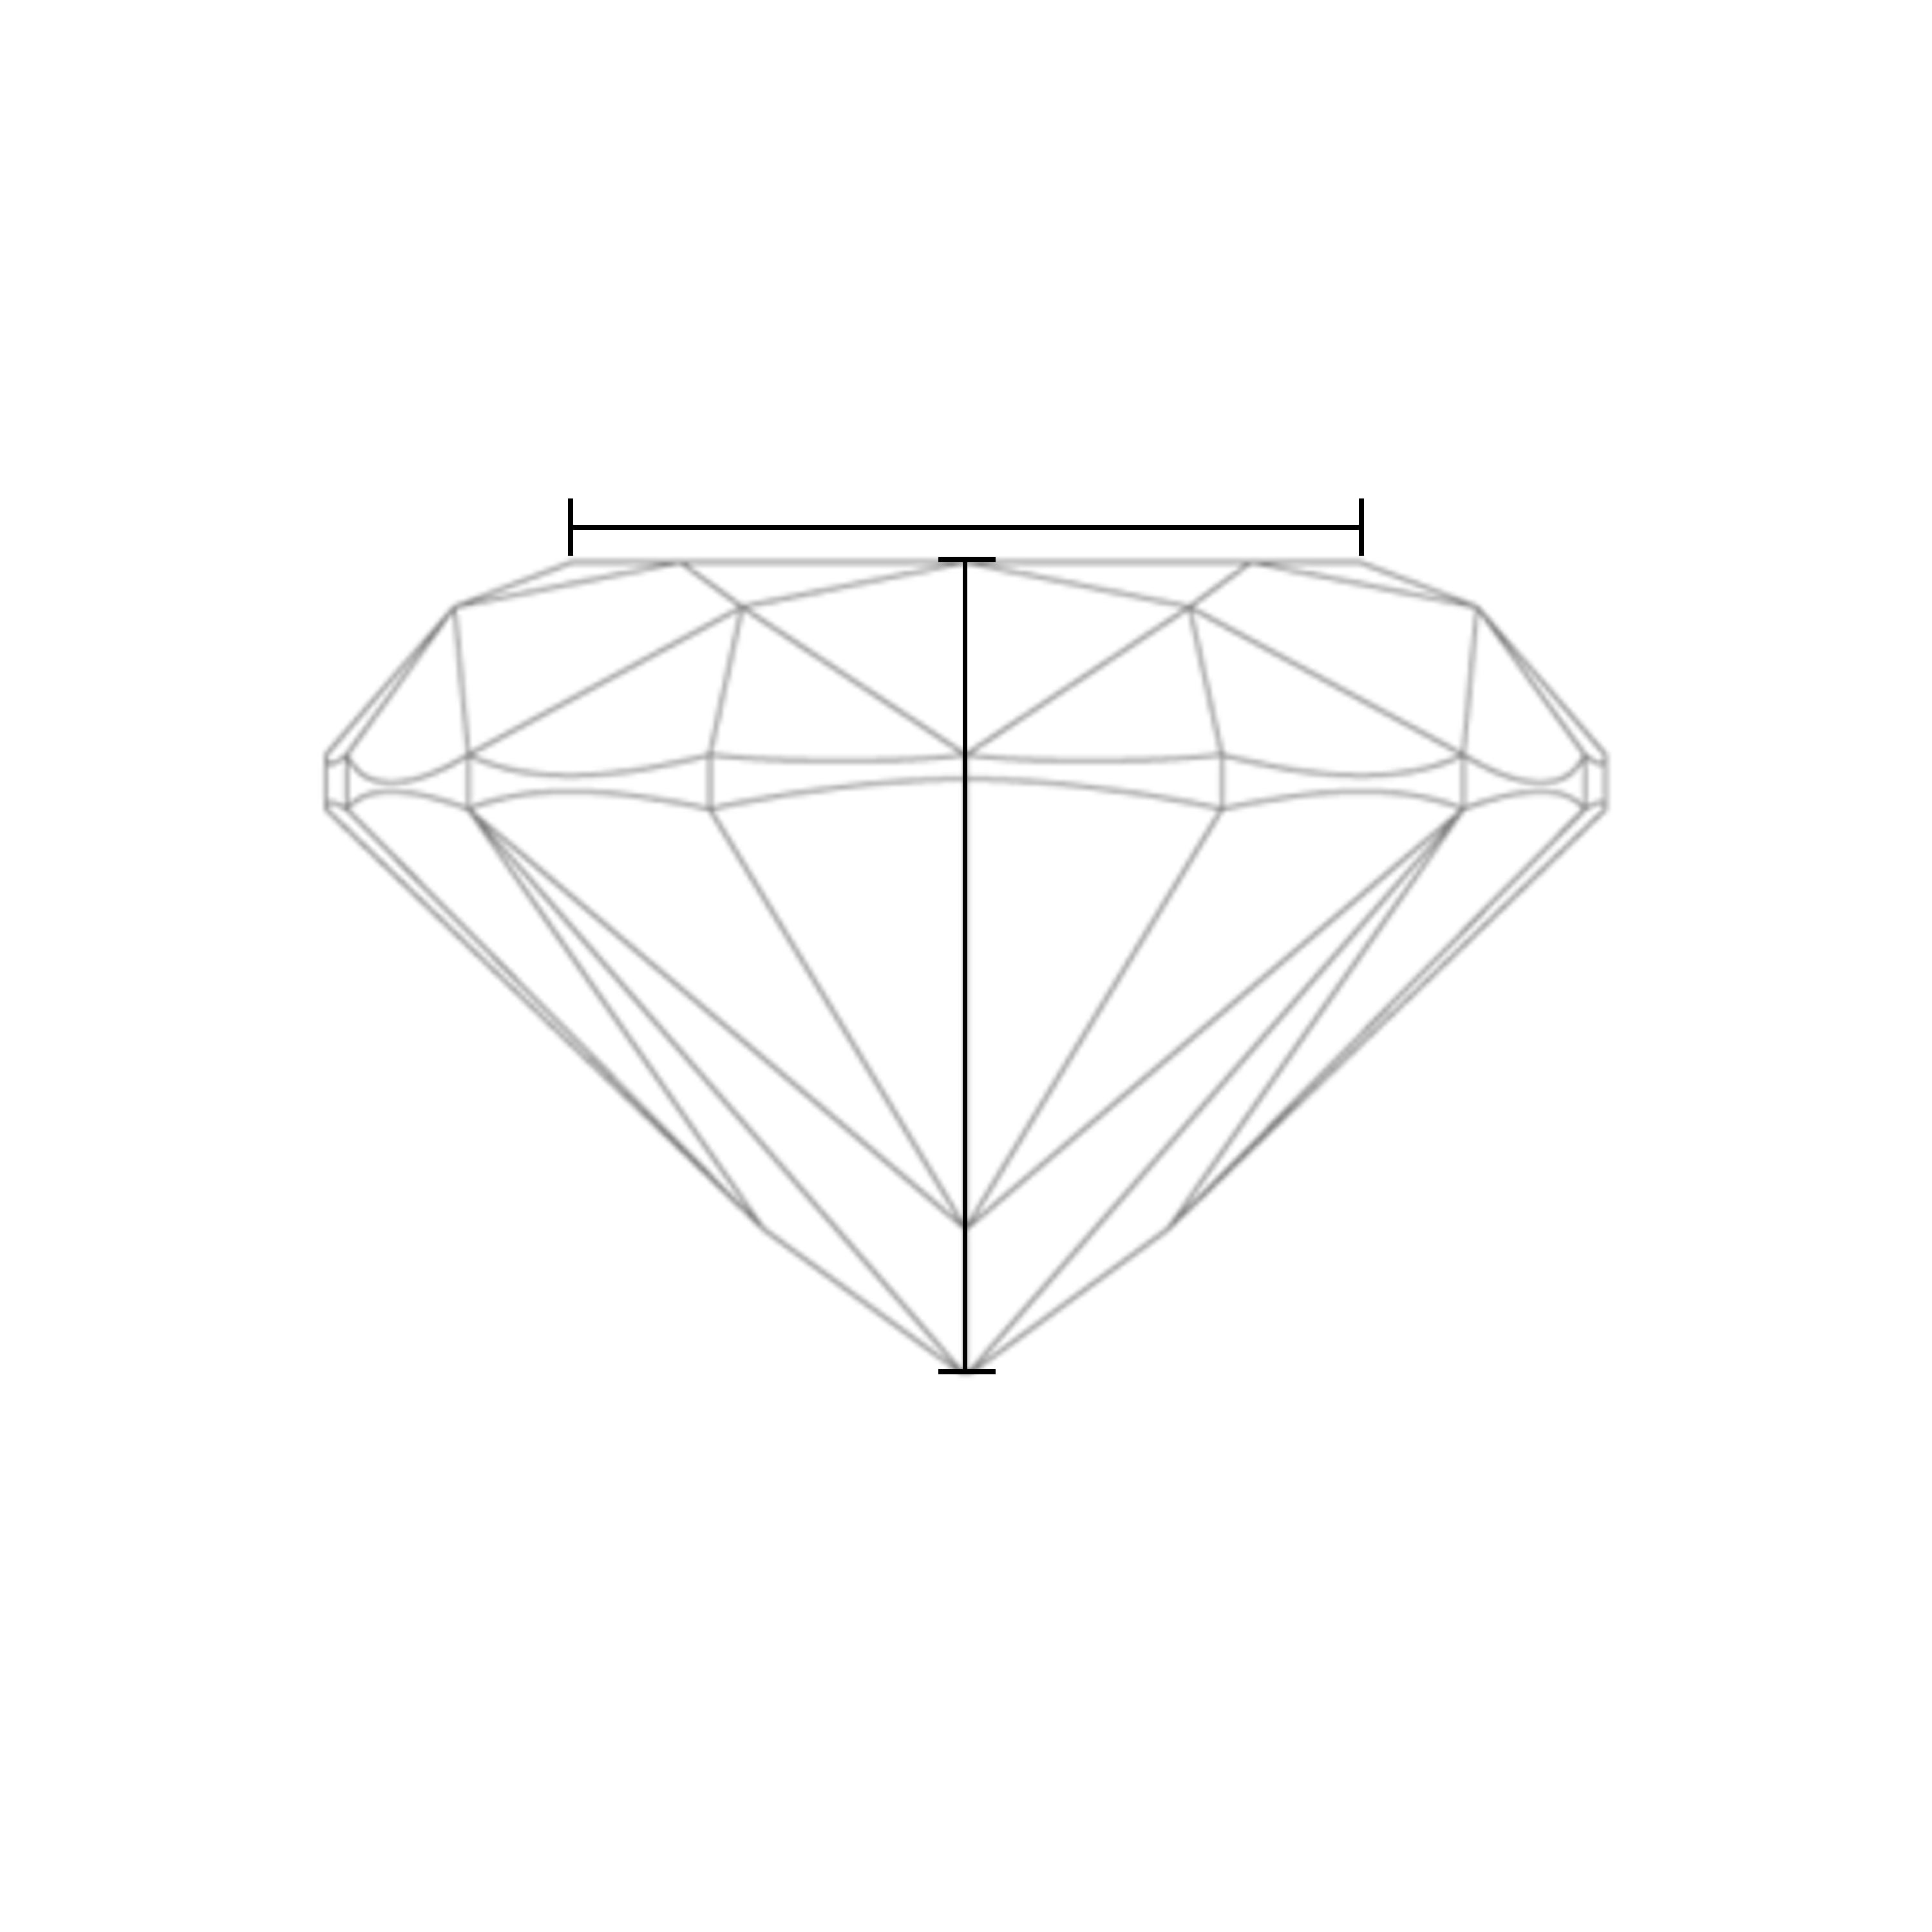 Cushion Lab Created Diamond